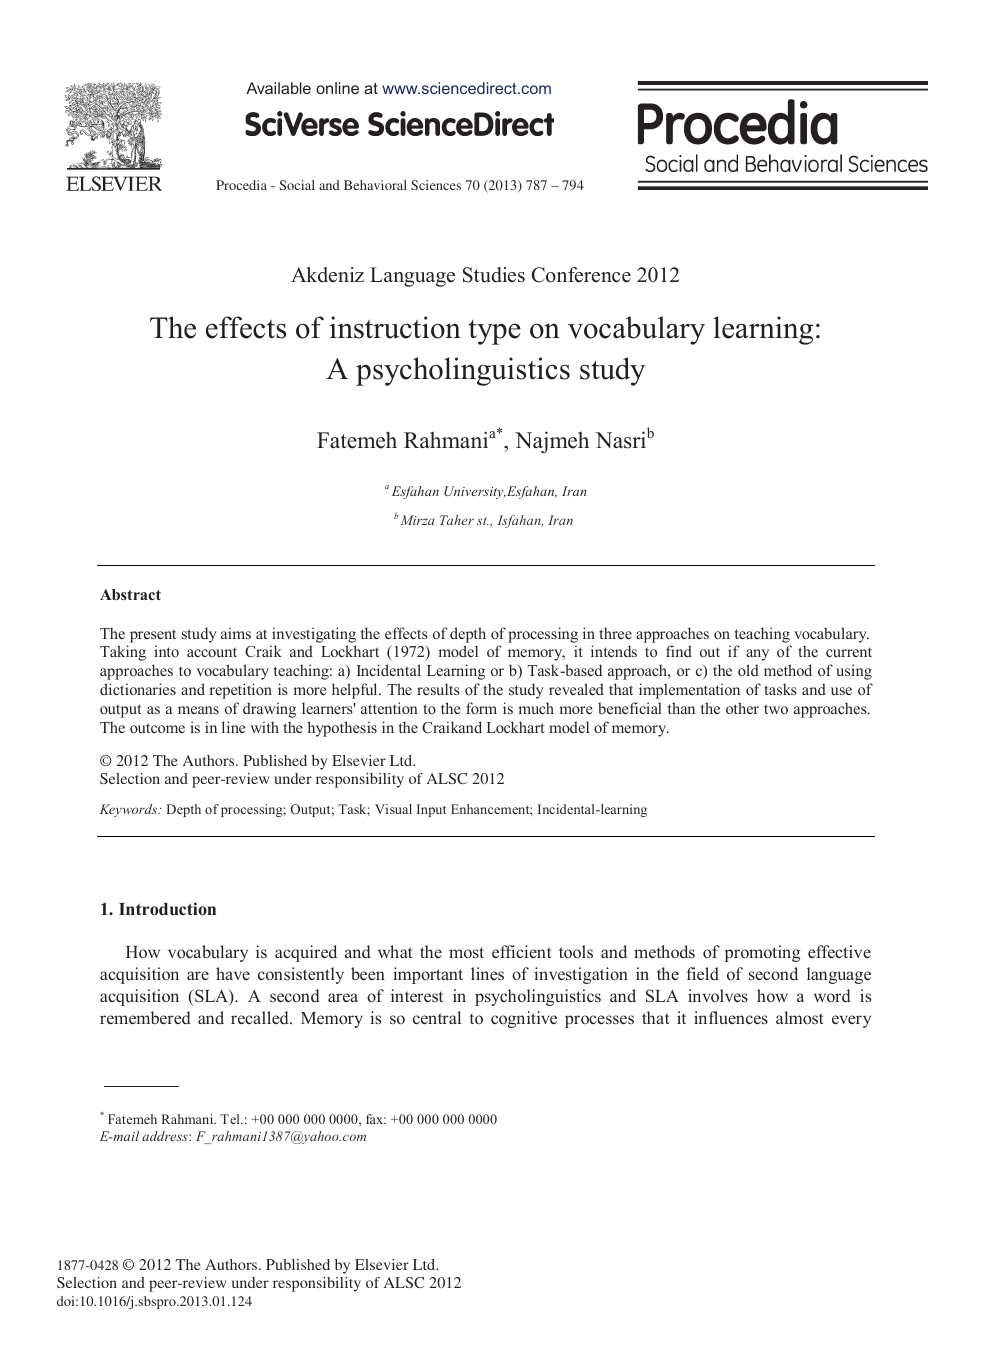 psycholinguistic research paper